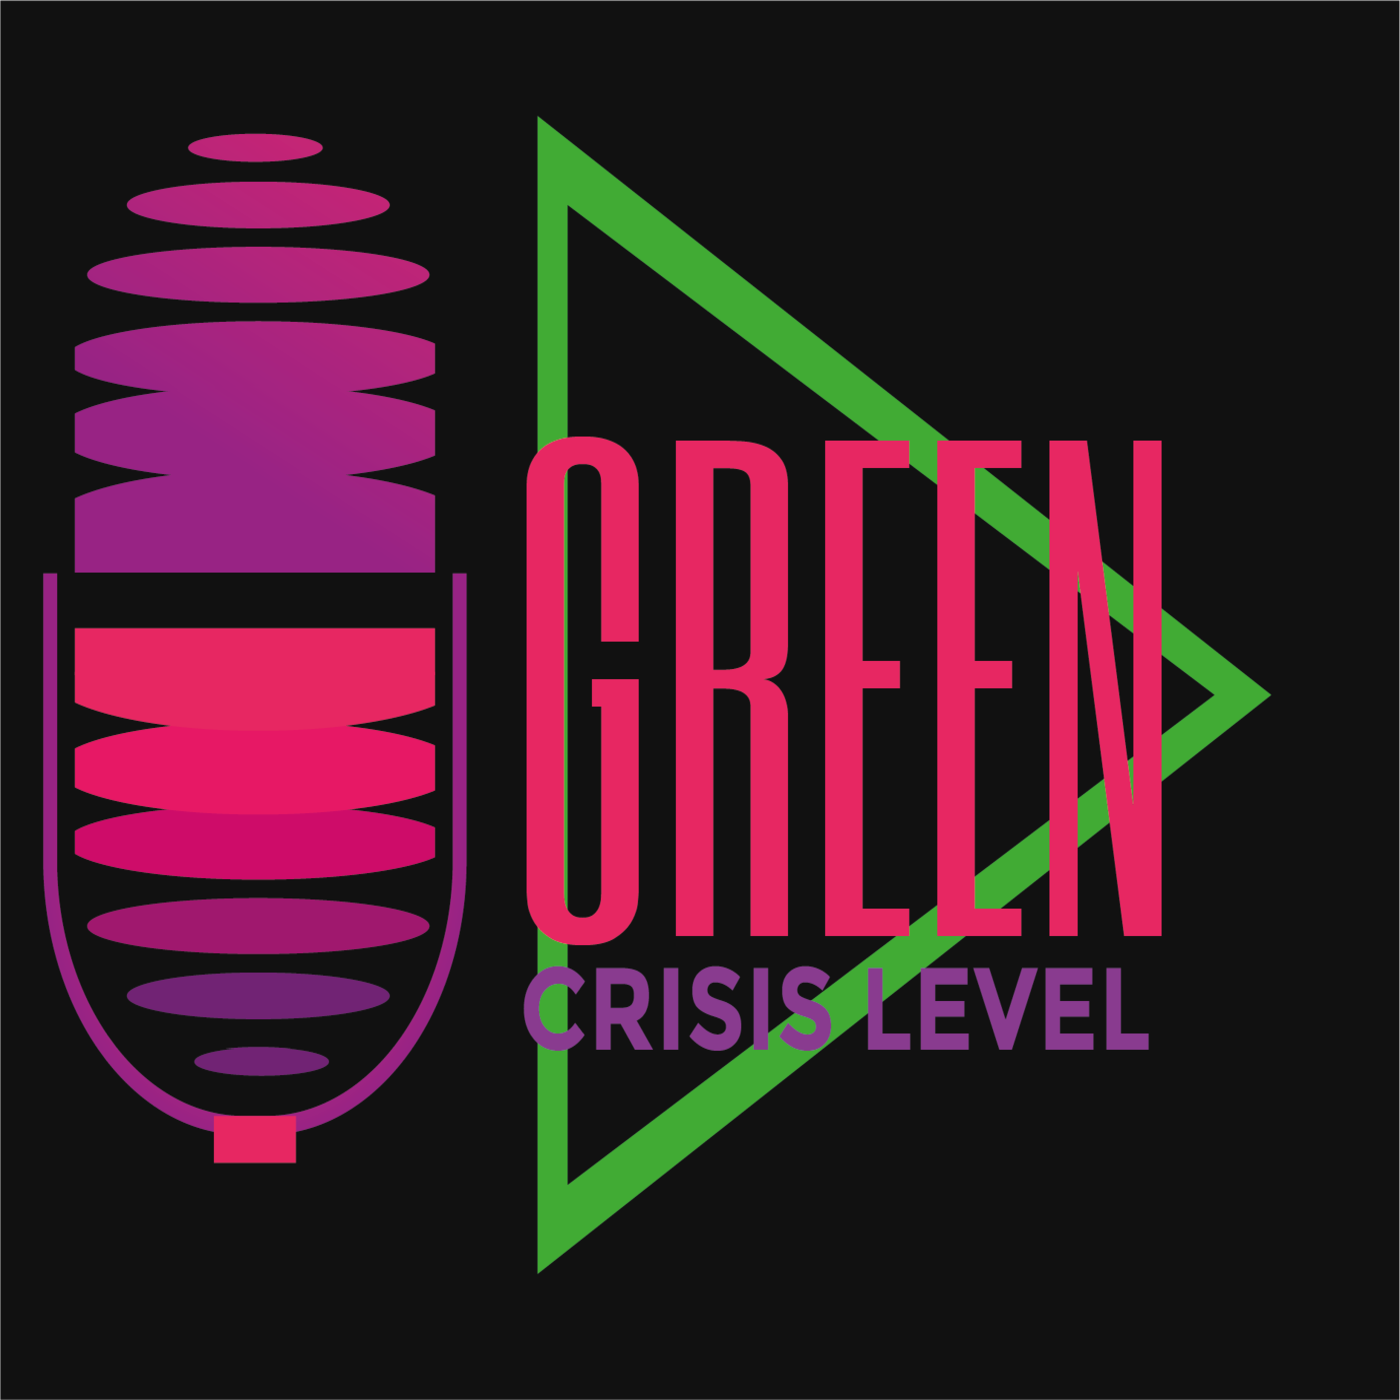 Show artwork for Crisis Level: Green